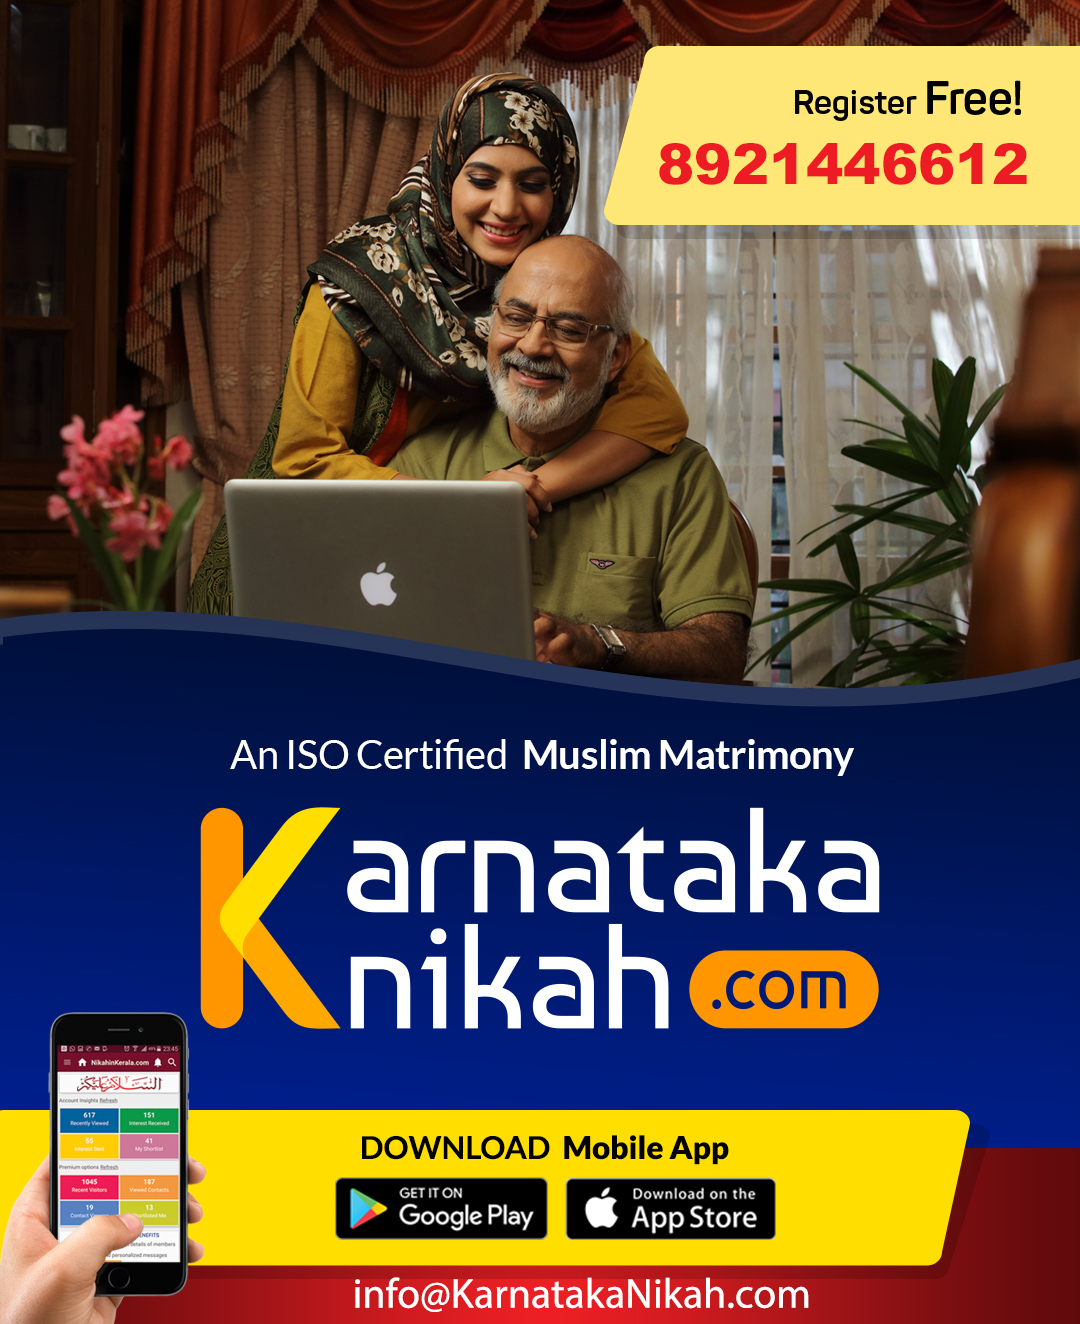 Free Muslim matrimonial website in Bangalore- Muslim Marriage site Bangalore- KarnatakaNikah